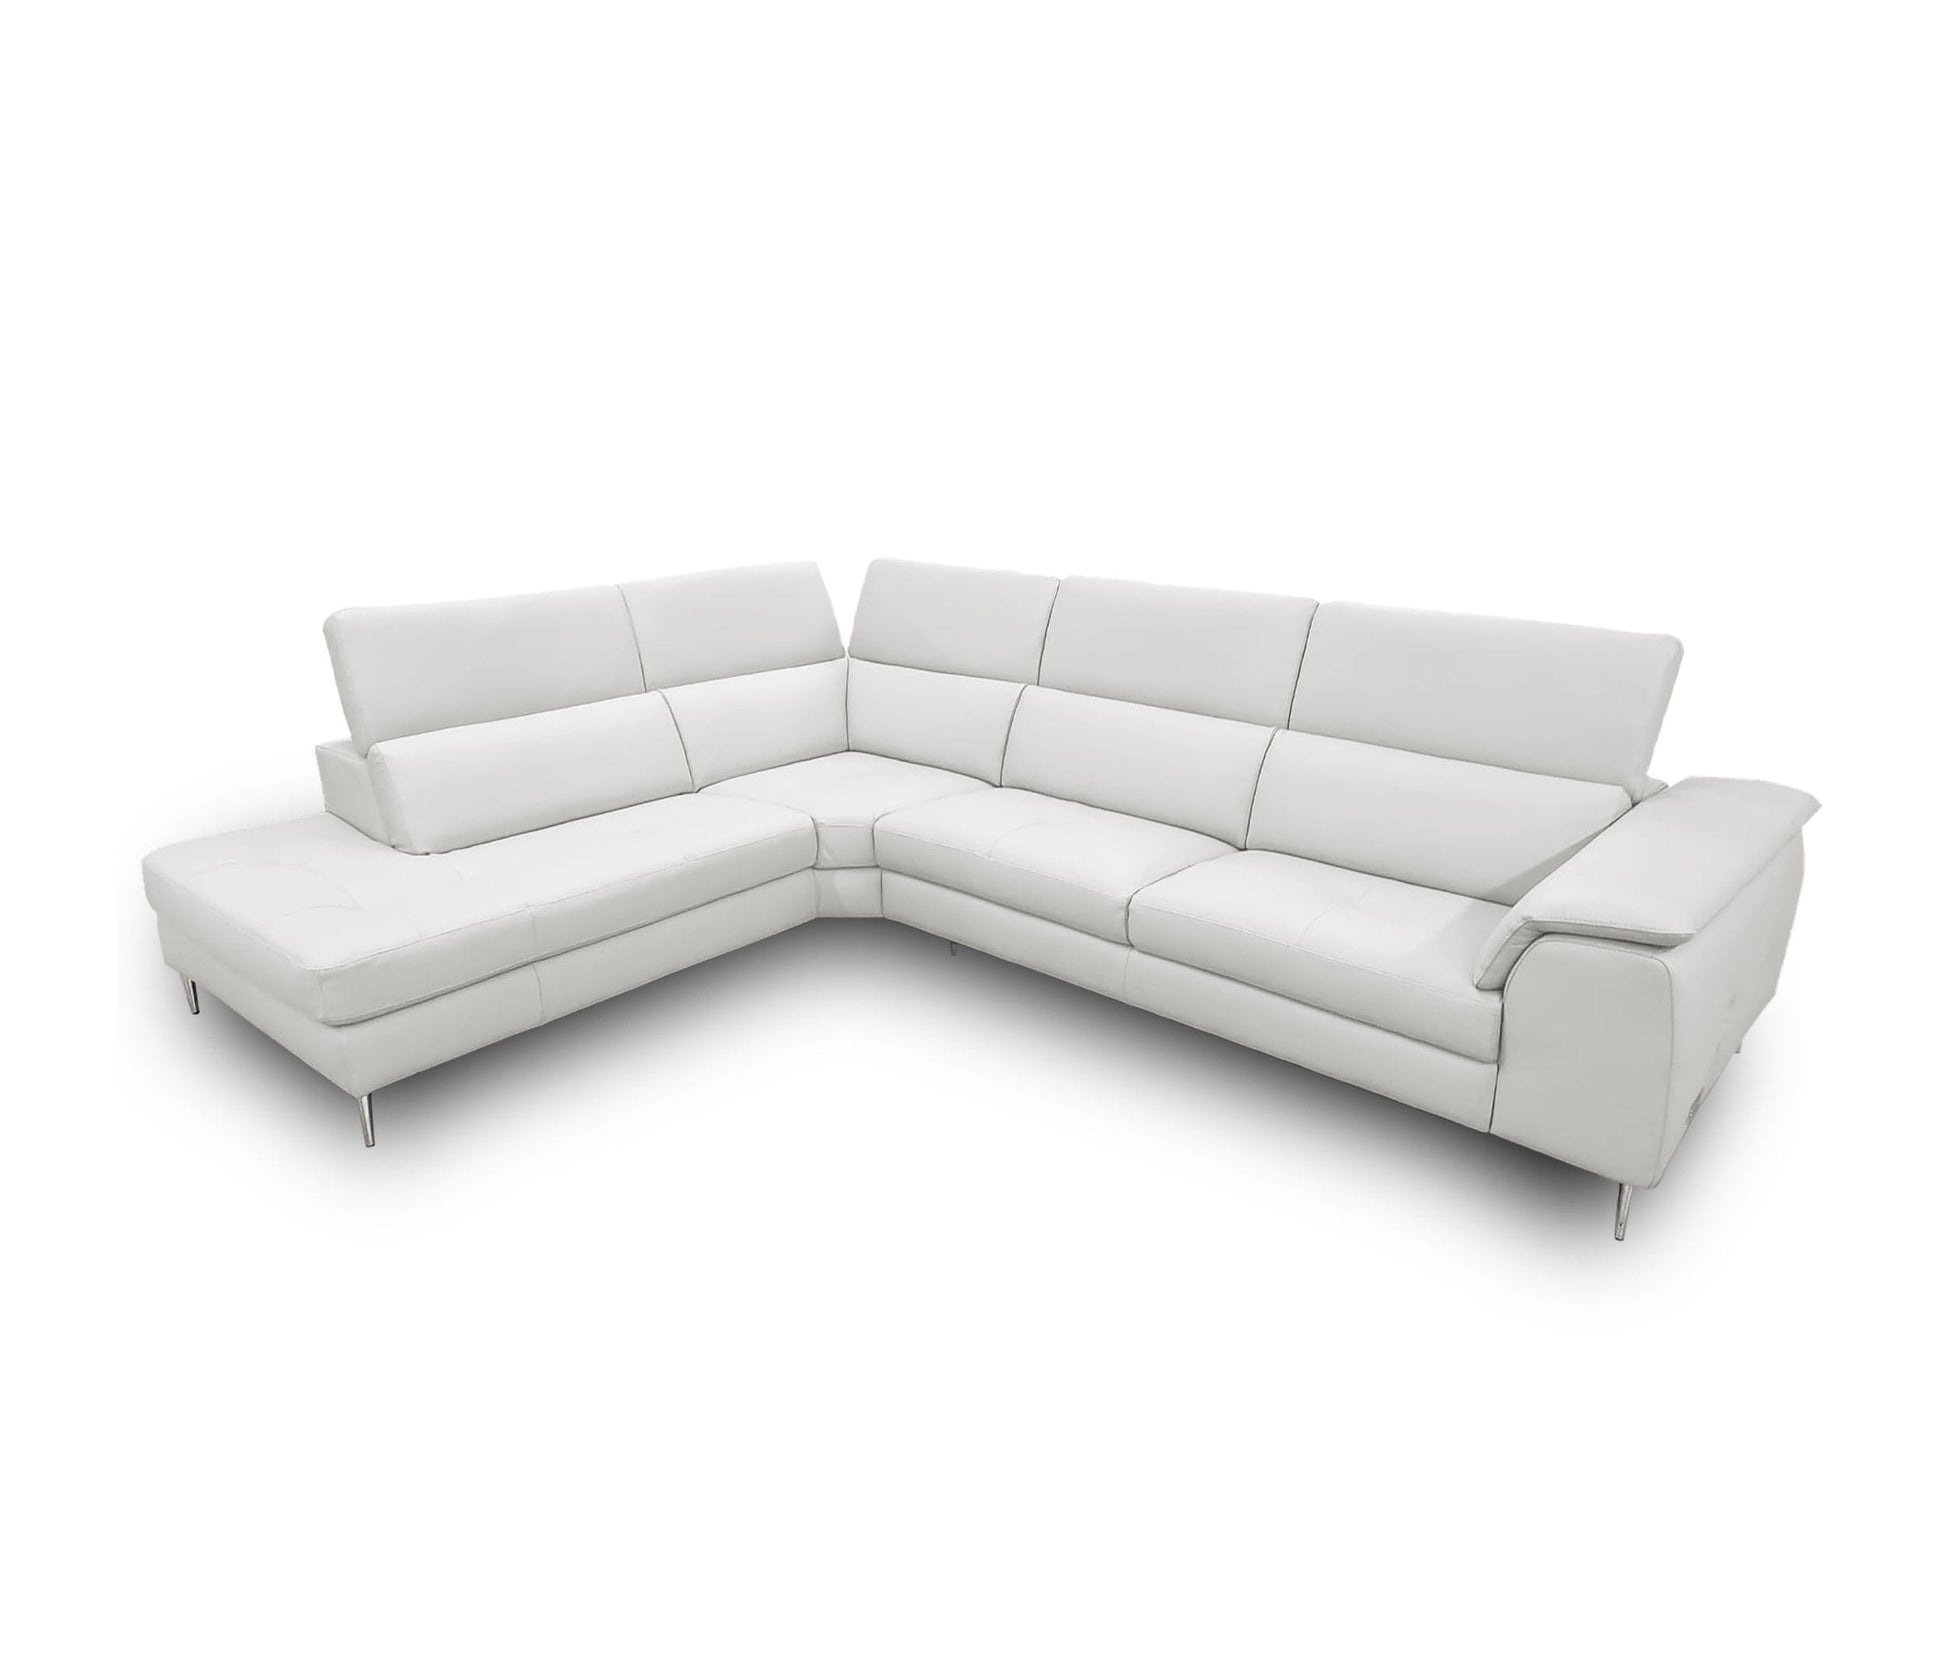 VIG Furniture Coronelli Viola Italian Grey Leather Left Sectional Sofa